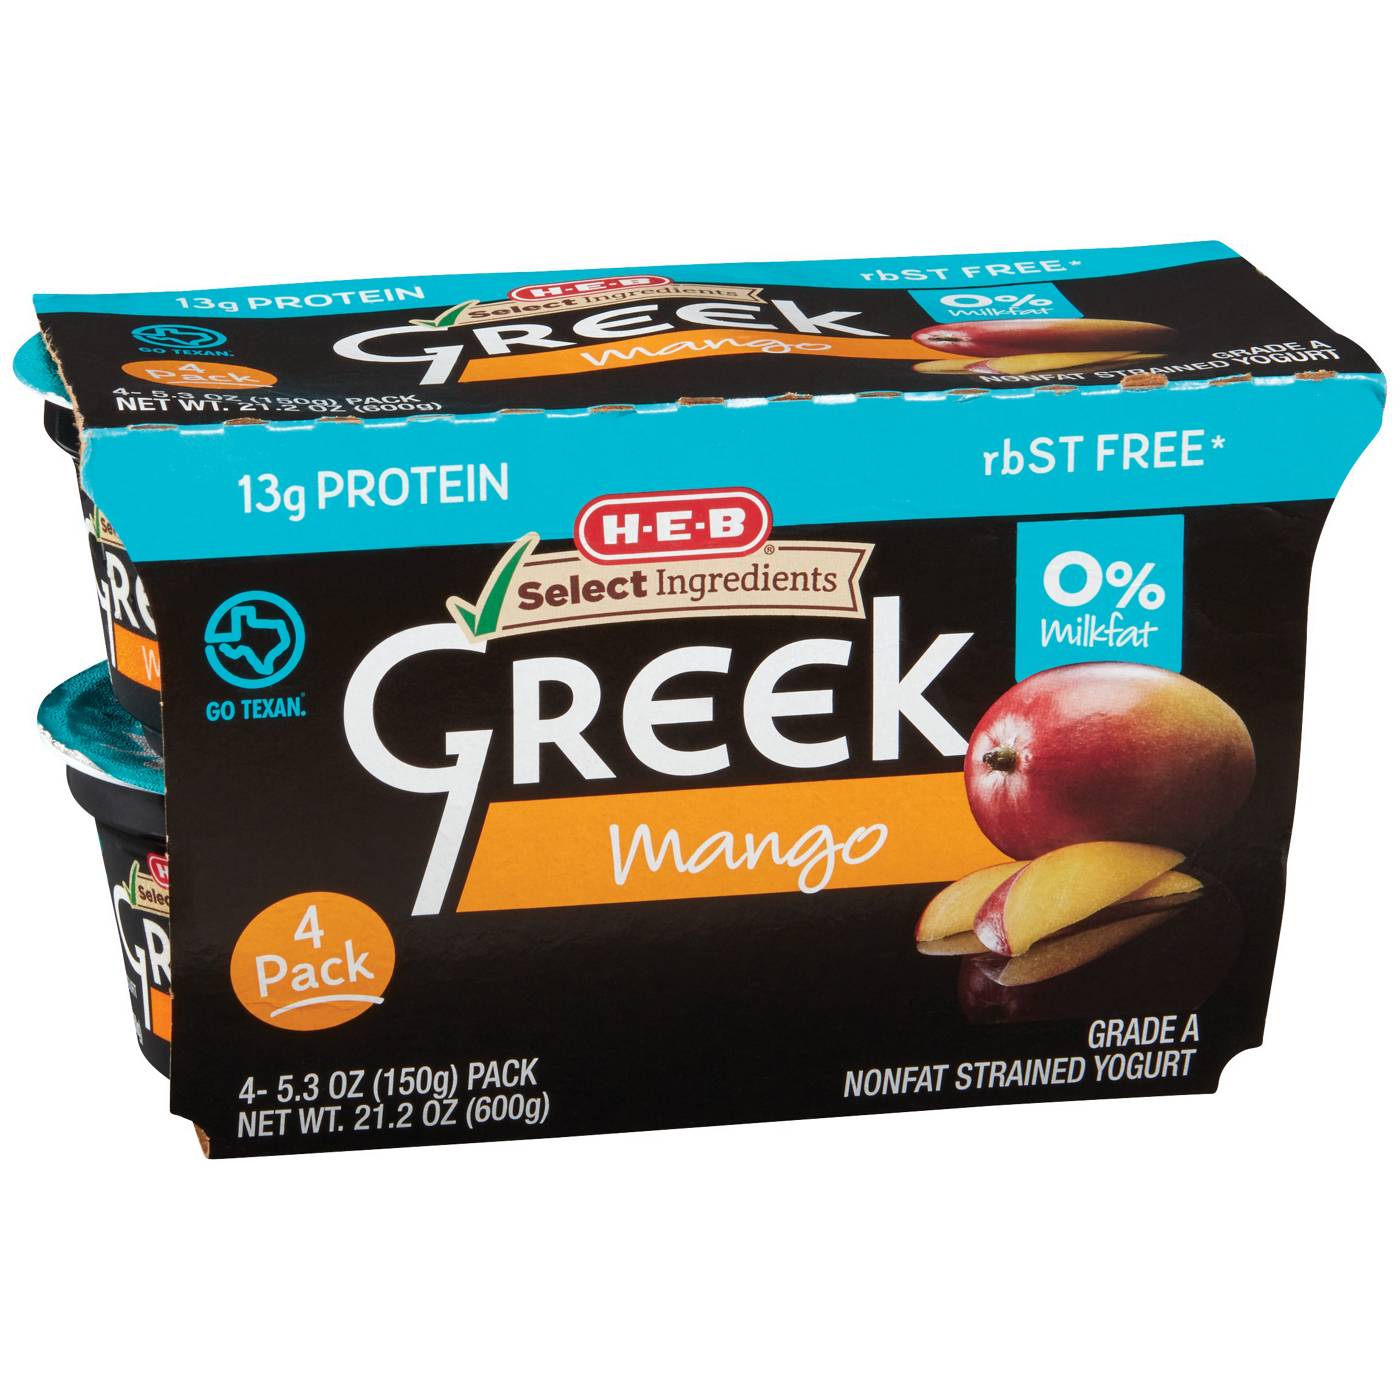 H-E-B 13g Protein Nonfat Greek Yogurt - Mango; image 1 of 2